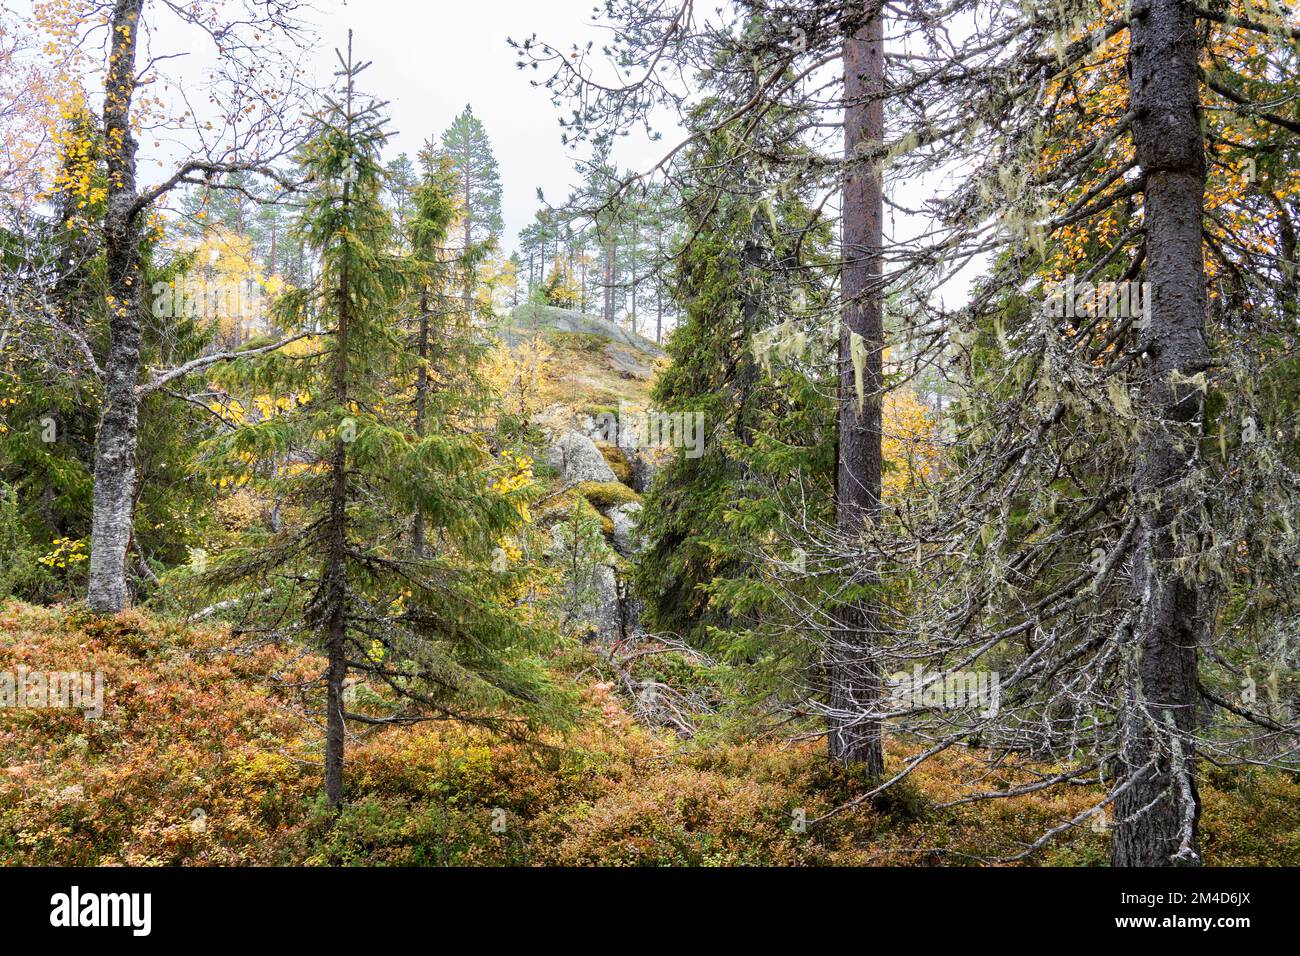 A colorful old-growth forest during fall foliage in Närängänvaara near Kuusamo, Northern Finland Stock Photo